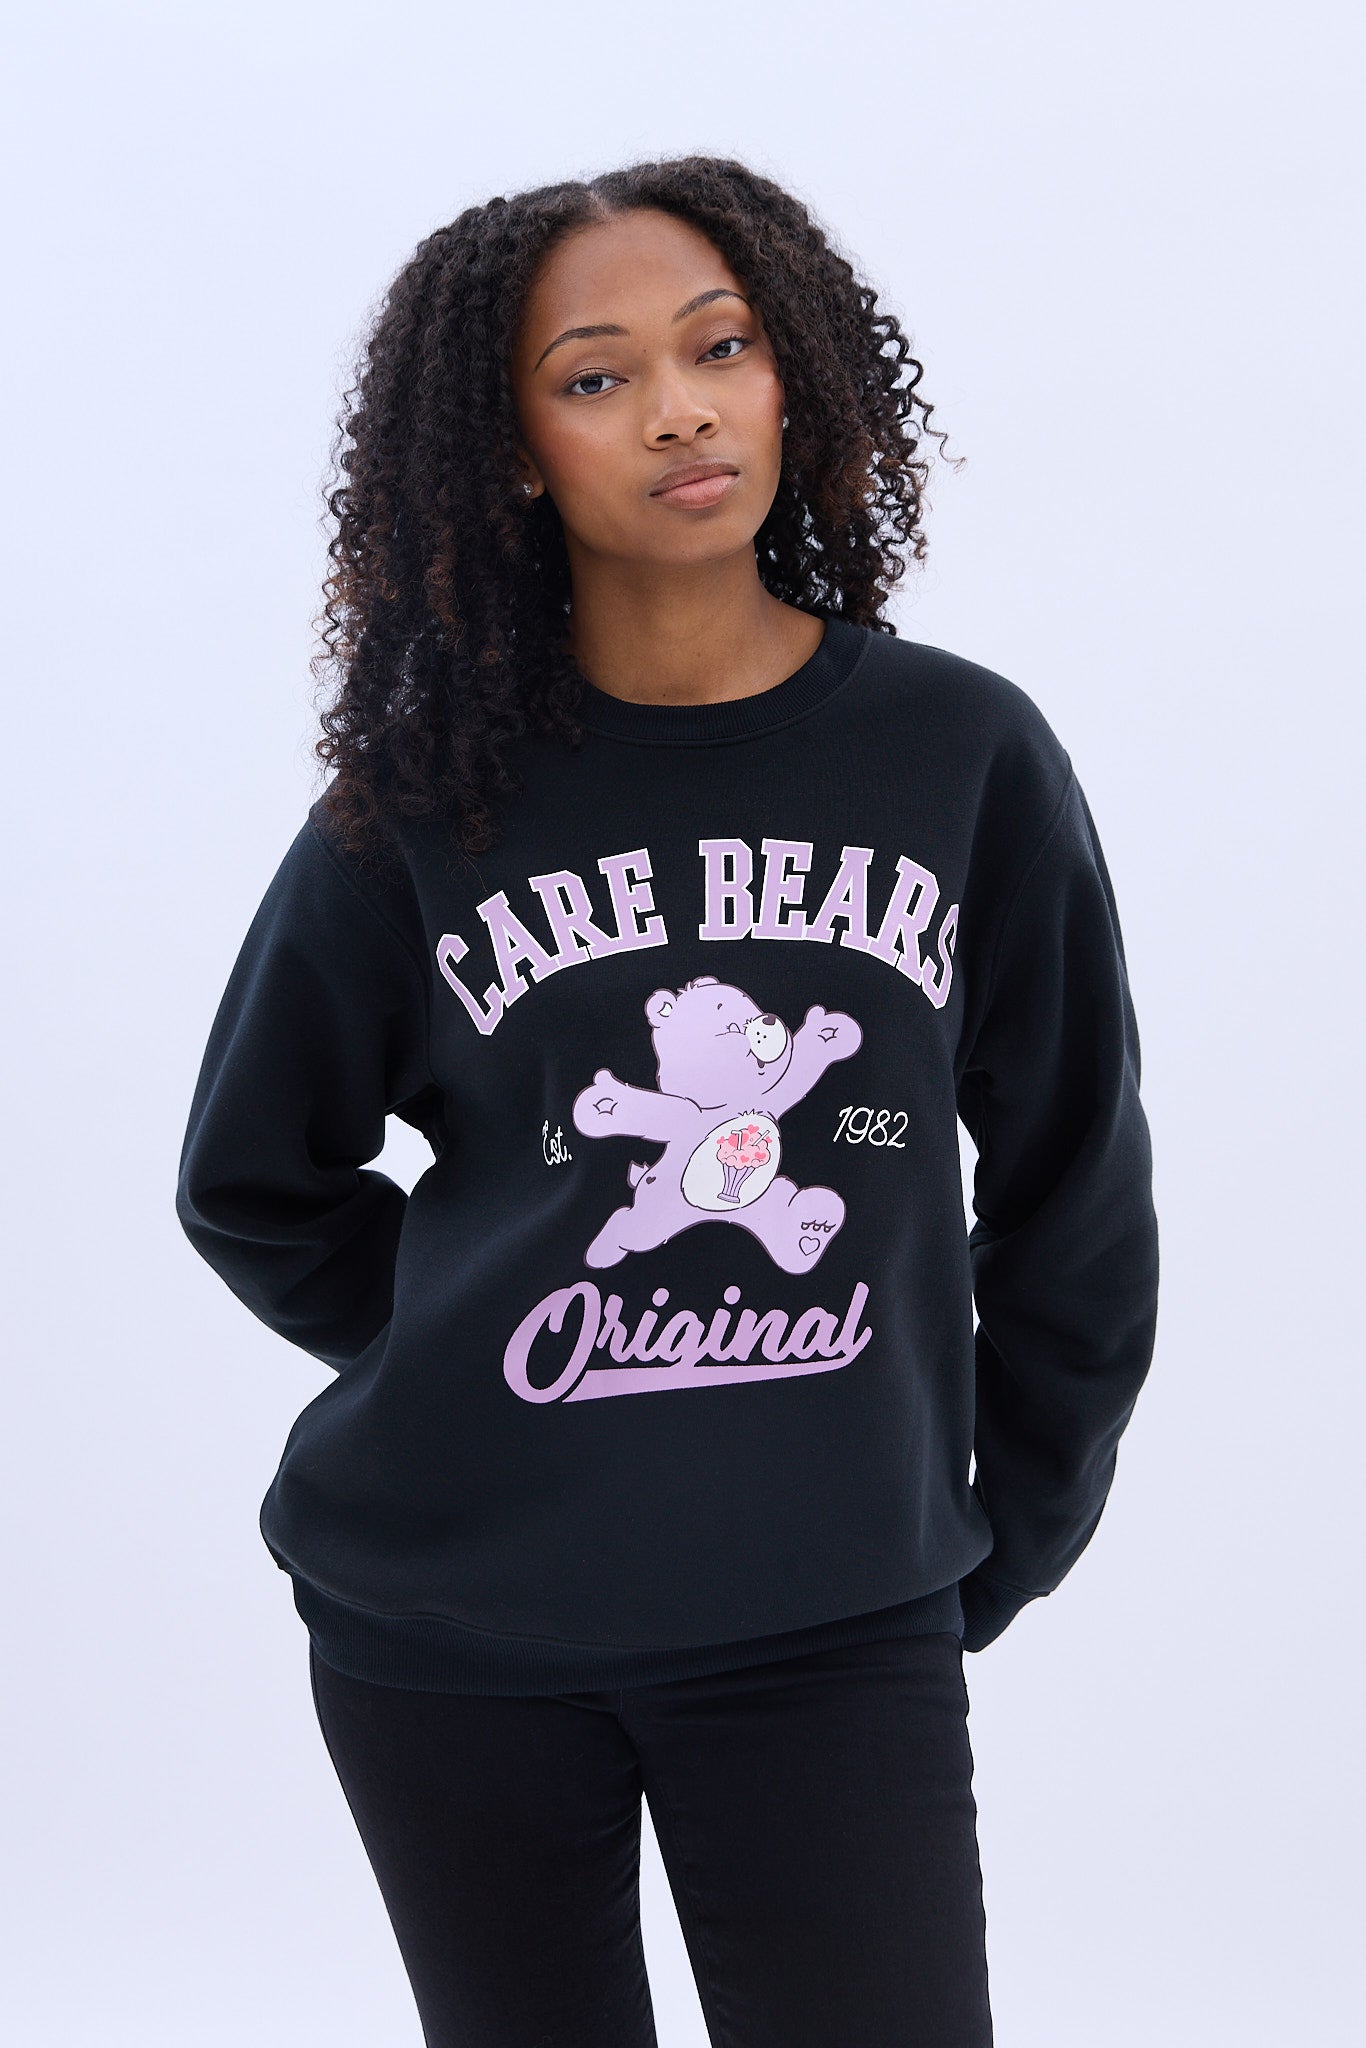 Care Bears Original Graphic Crew Neck Sweatshirt